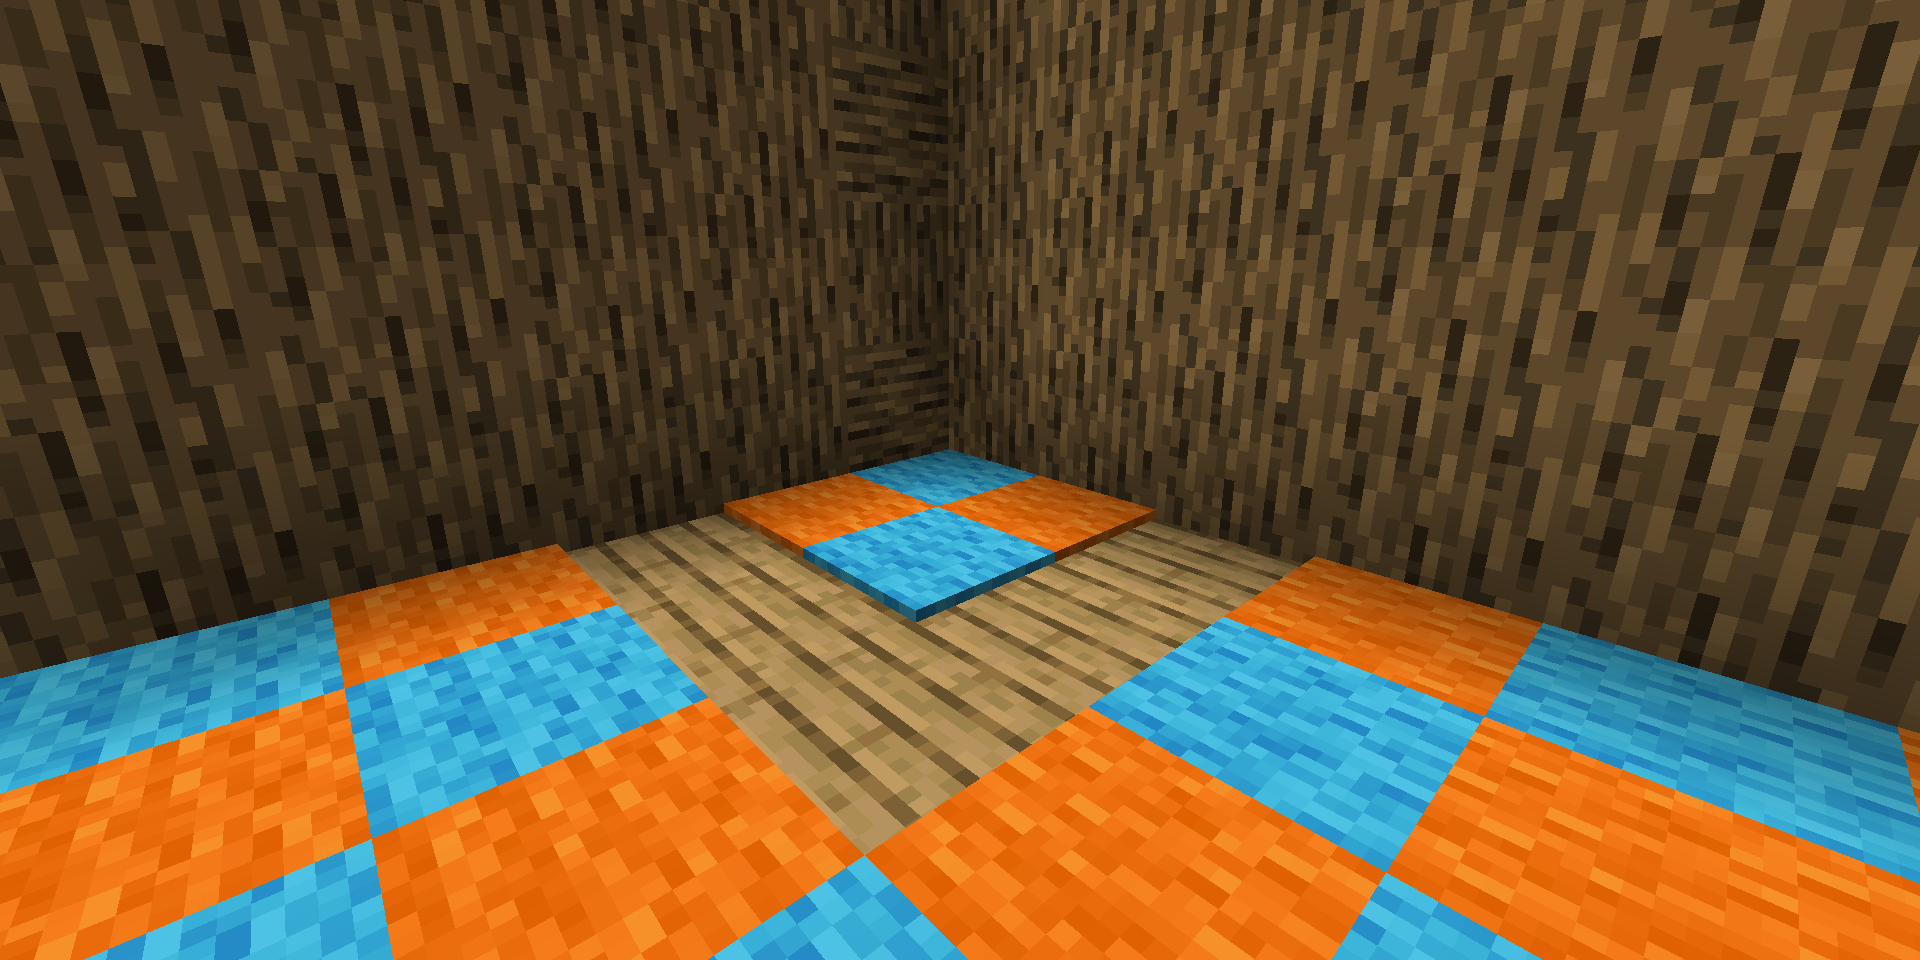 Blue and orange carpets in Minecraft